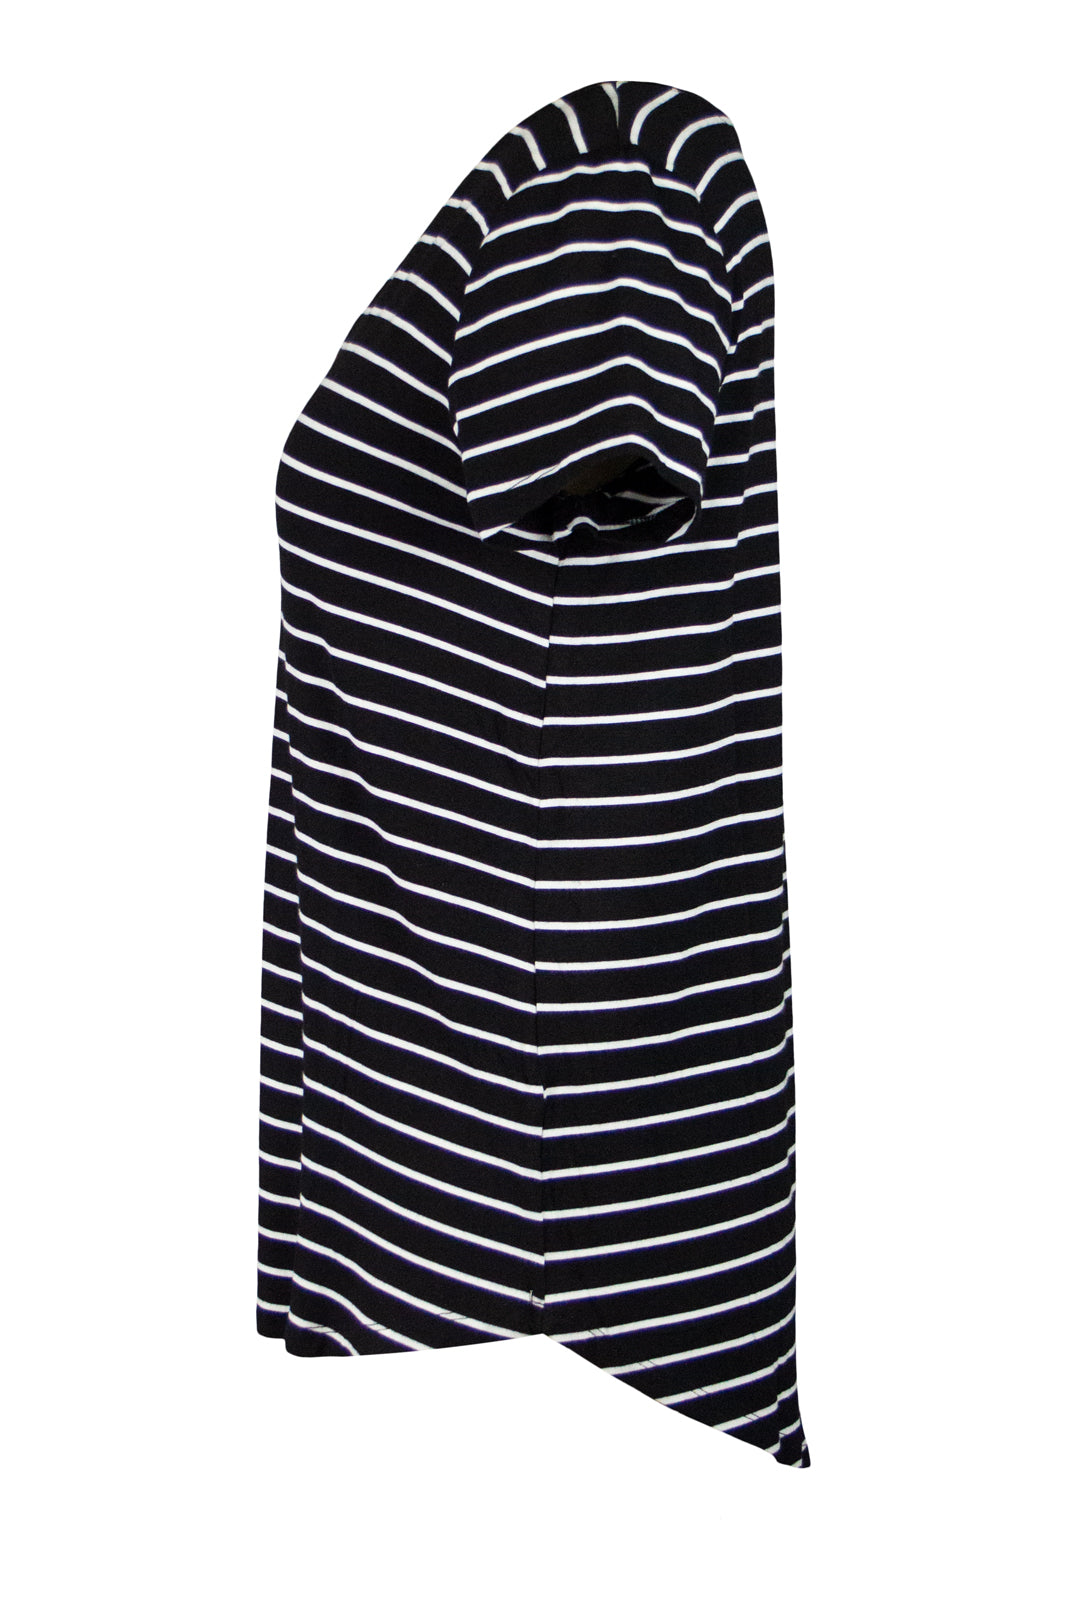 Logo Drape V-Neck T-Shirt -  Black & White Stripe Pink Tartan